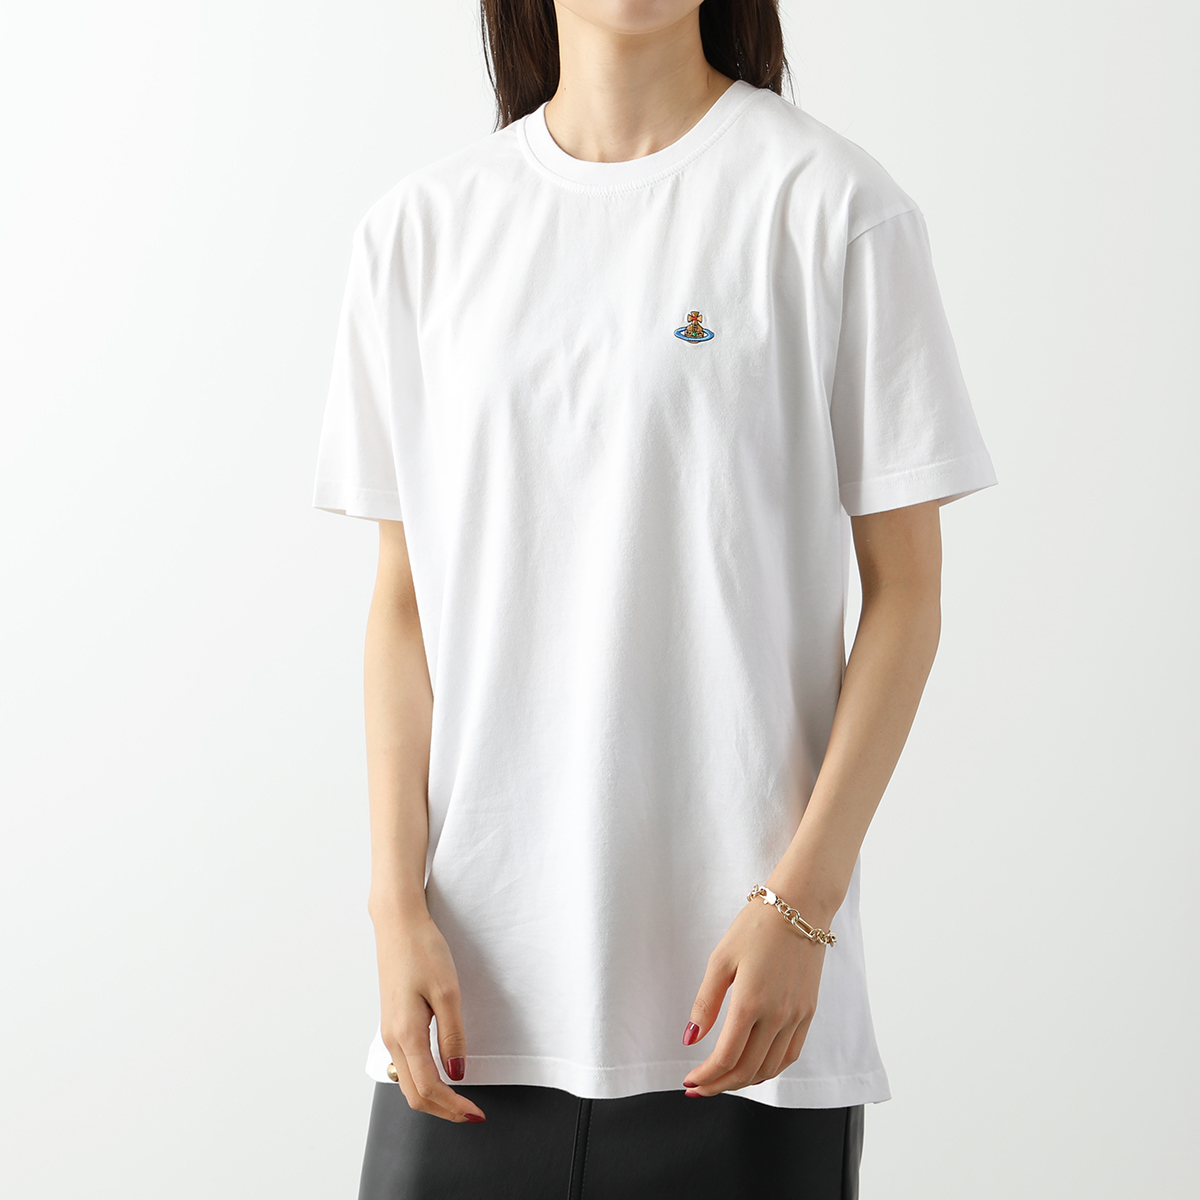 Vivienne Westwood ヴィヴィアンウエストウッド 半袖 Tシャツ 3G010006 J001M レディース クルーネック カットソー  コットン オーブ 刺繍 オーバーサイズ カラー2色 | インポートセレクト musee